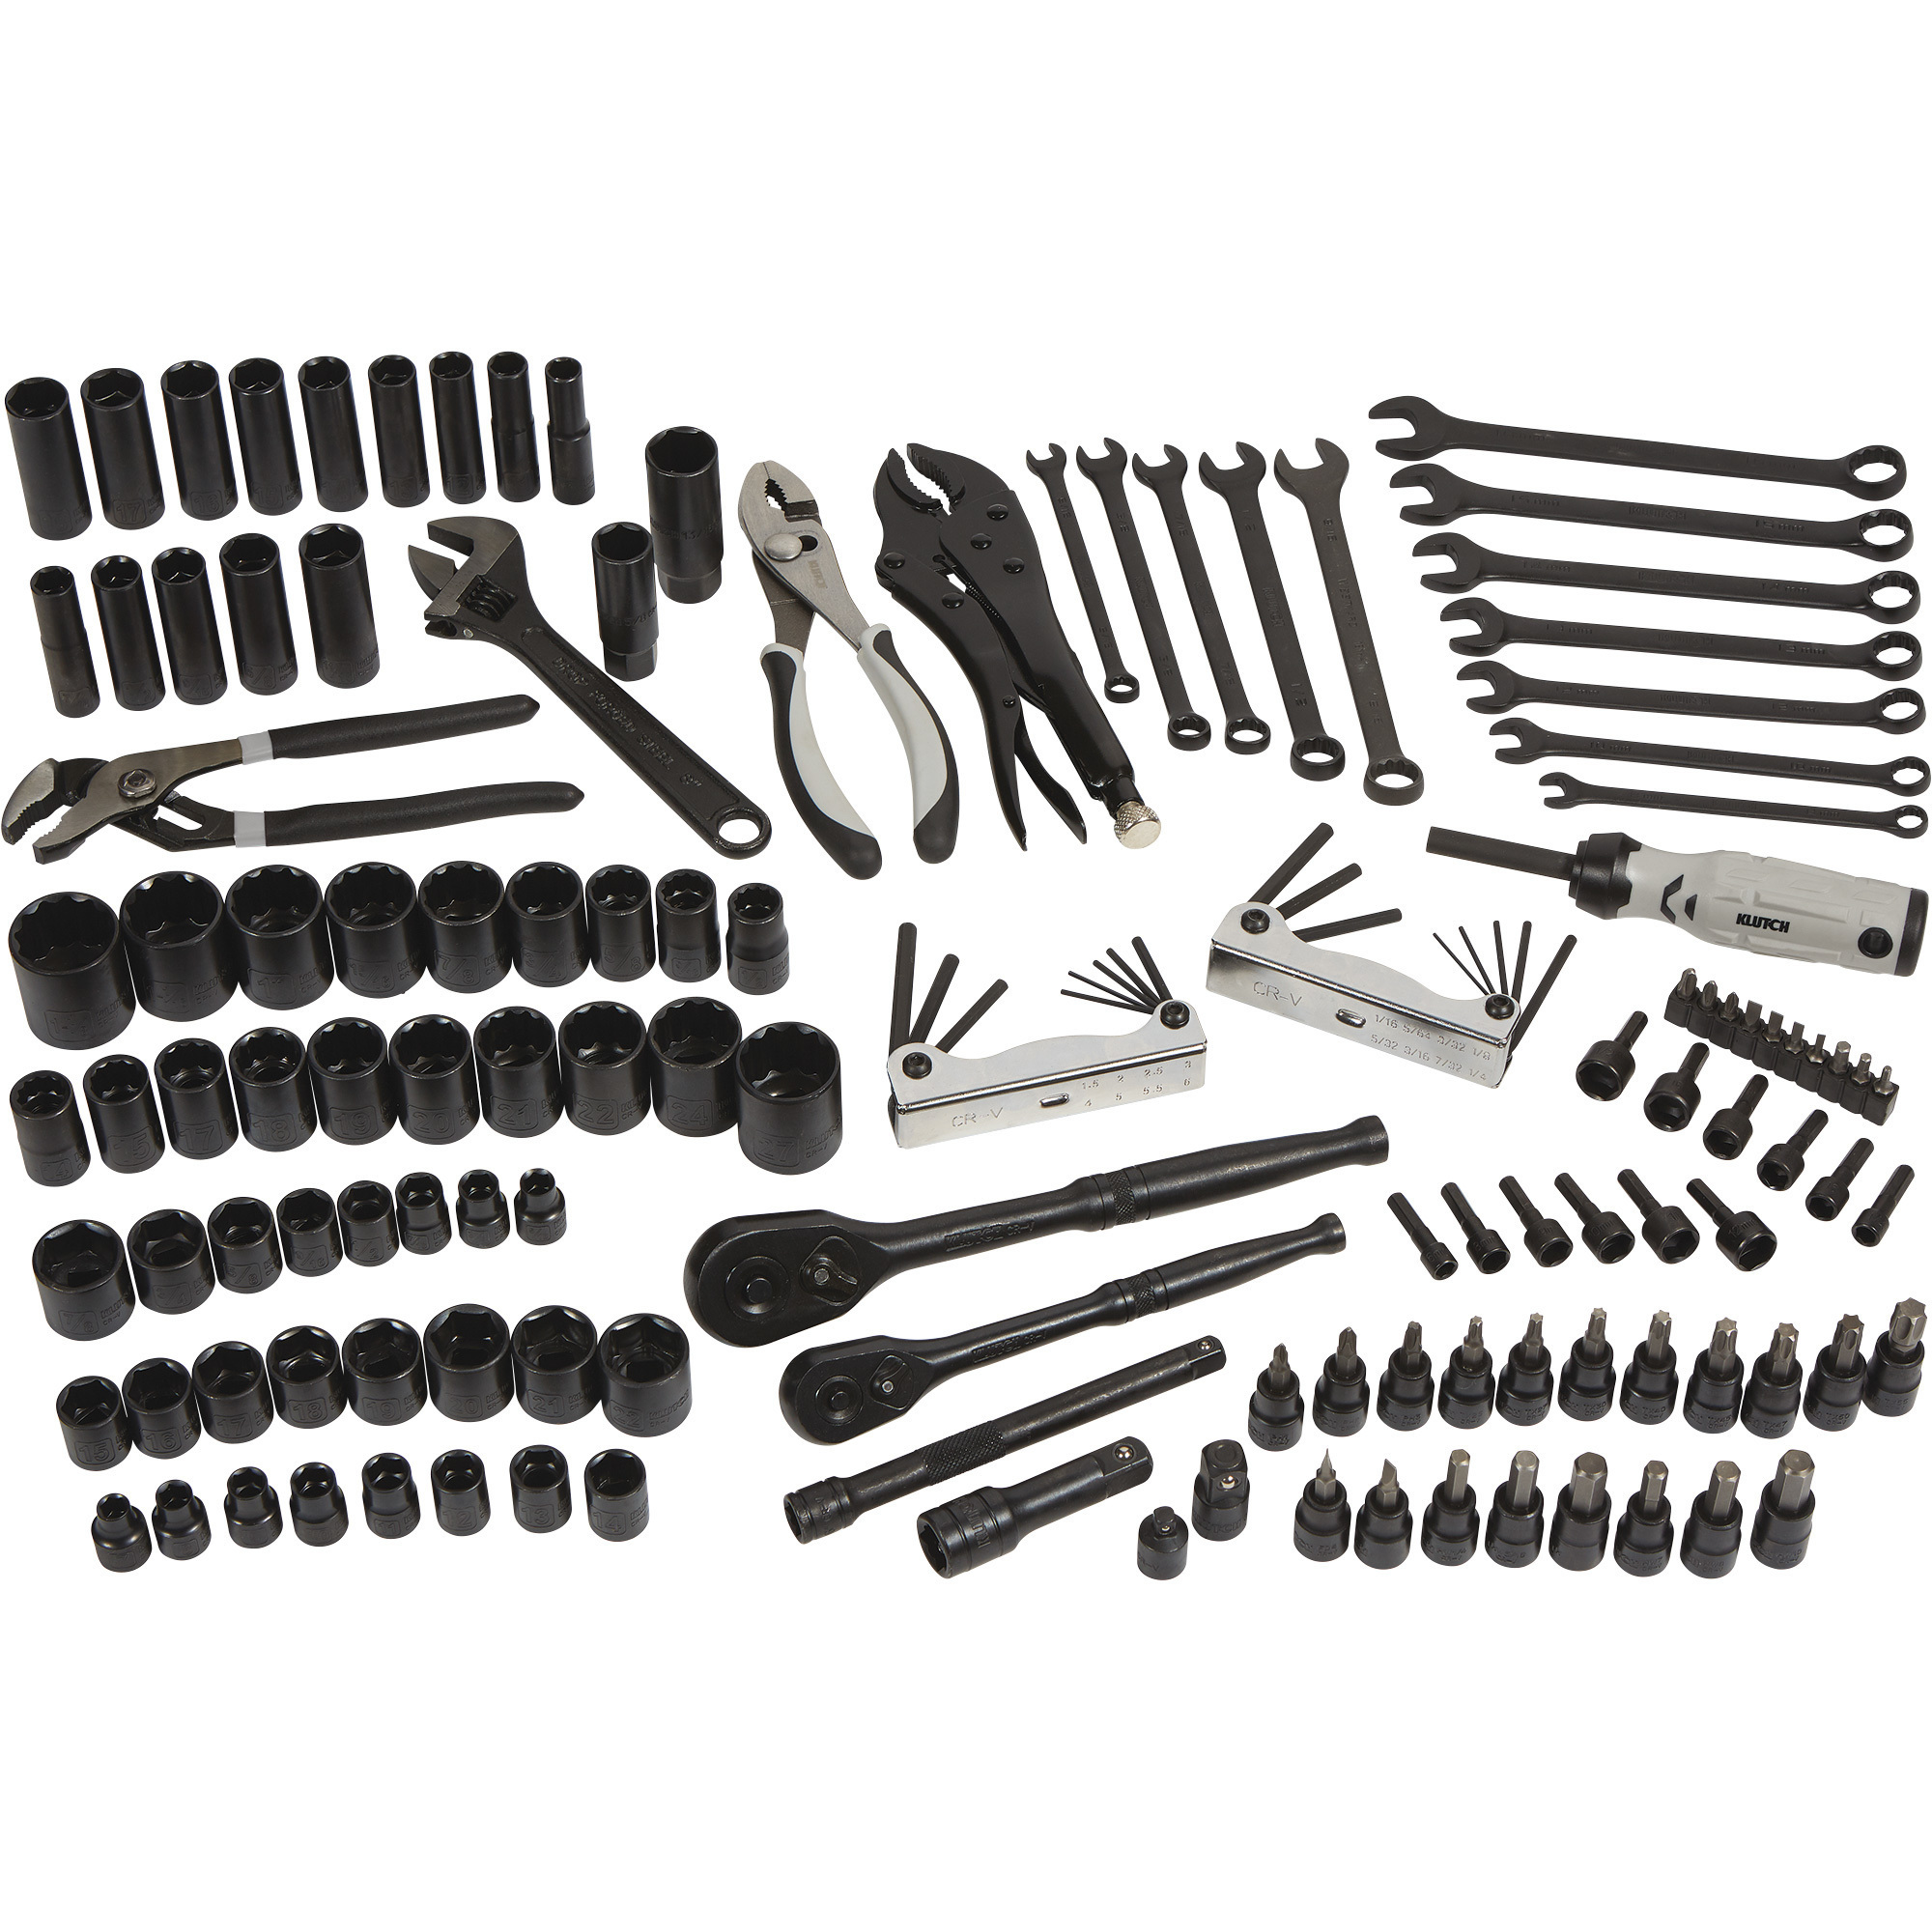 Klutch Industrial Maintenance Tool Set, 139-Piece, 3/8Inch & 1/2Inch Drive